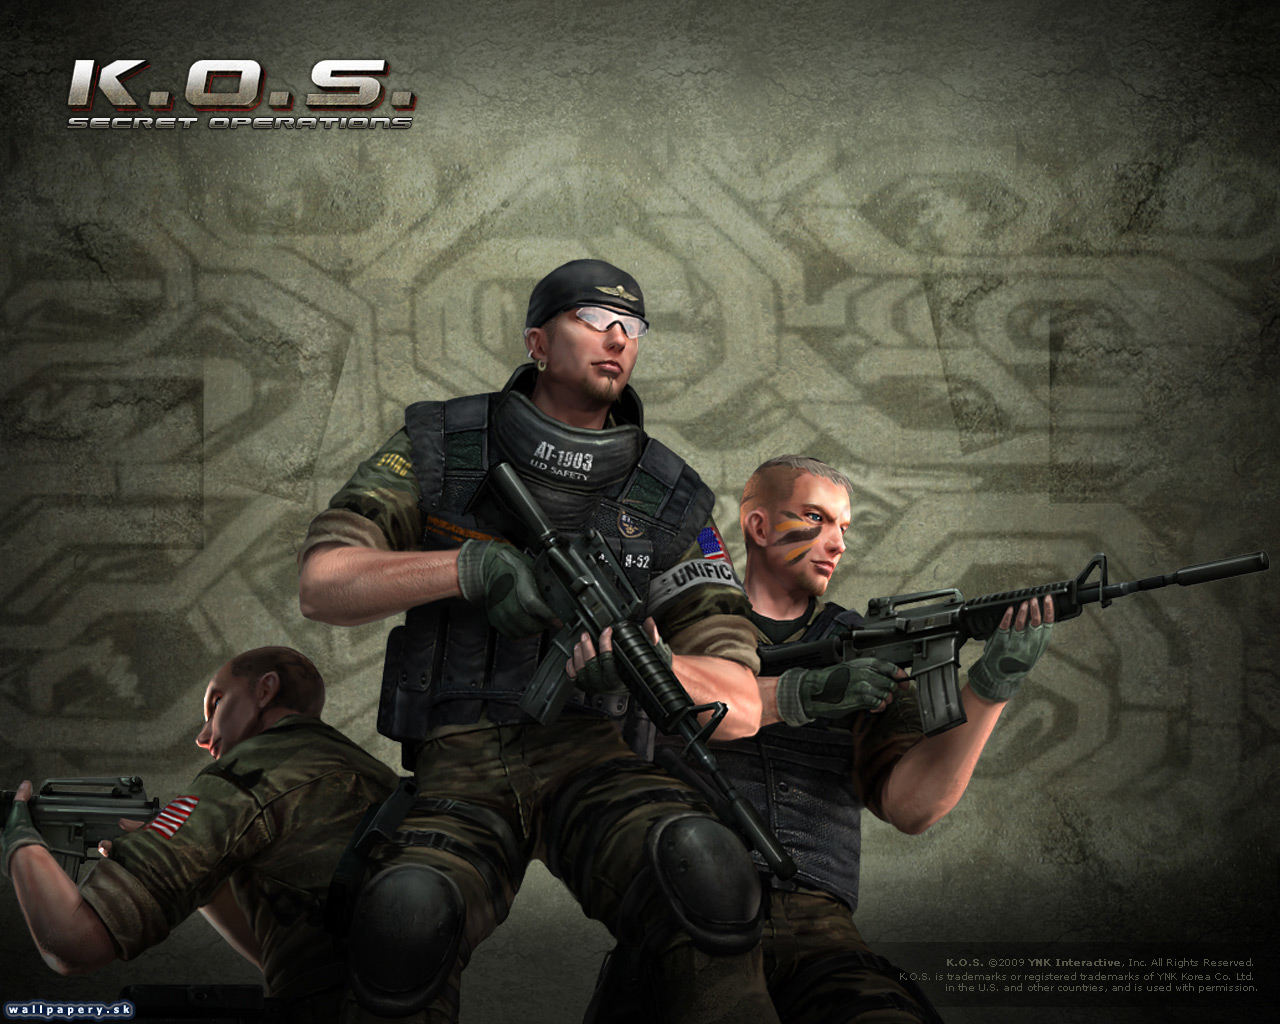 K.O.S. Secret Operations - wallpaper 2